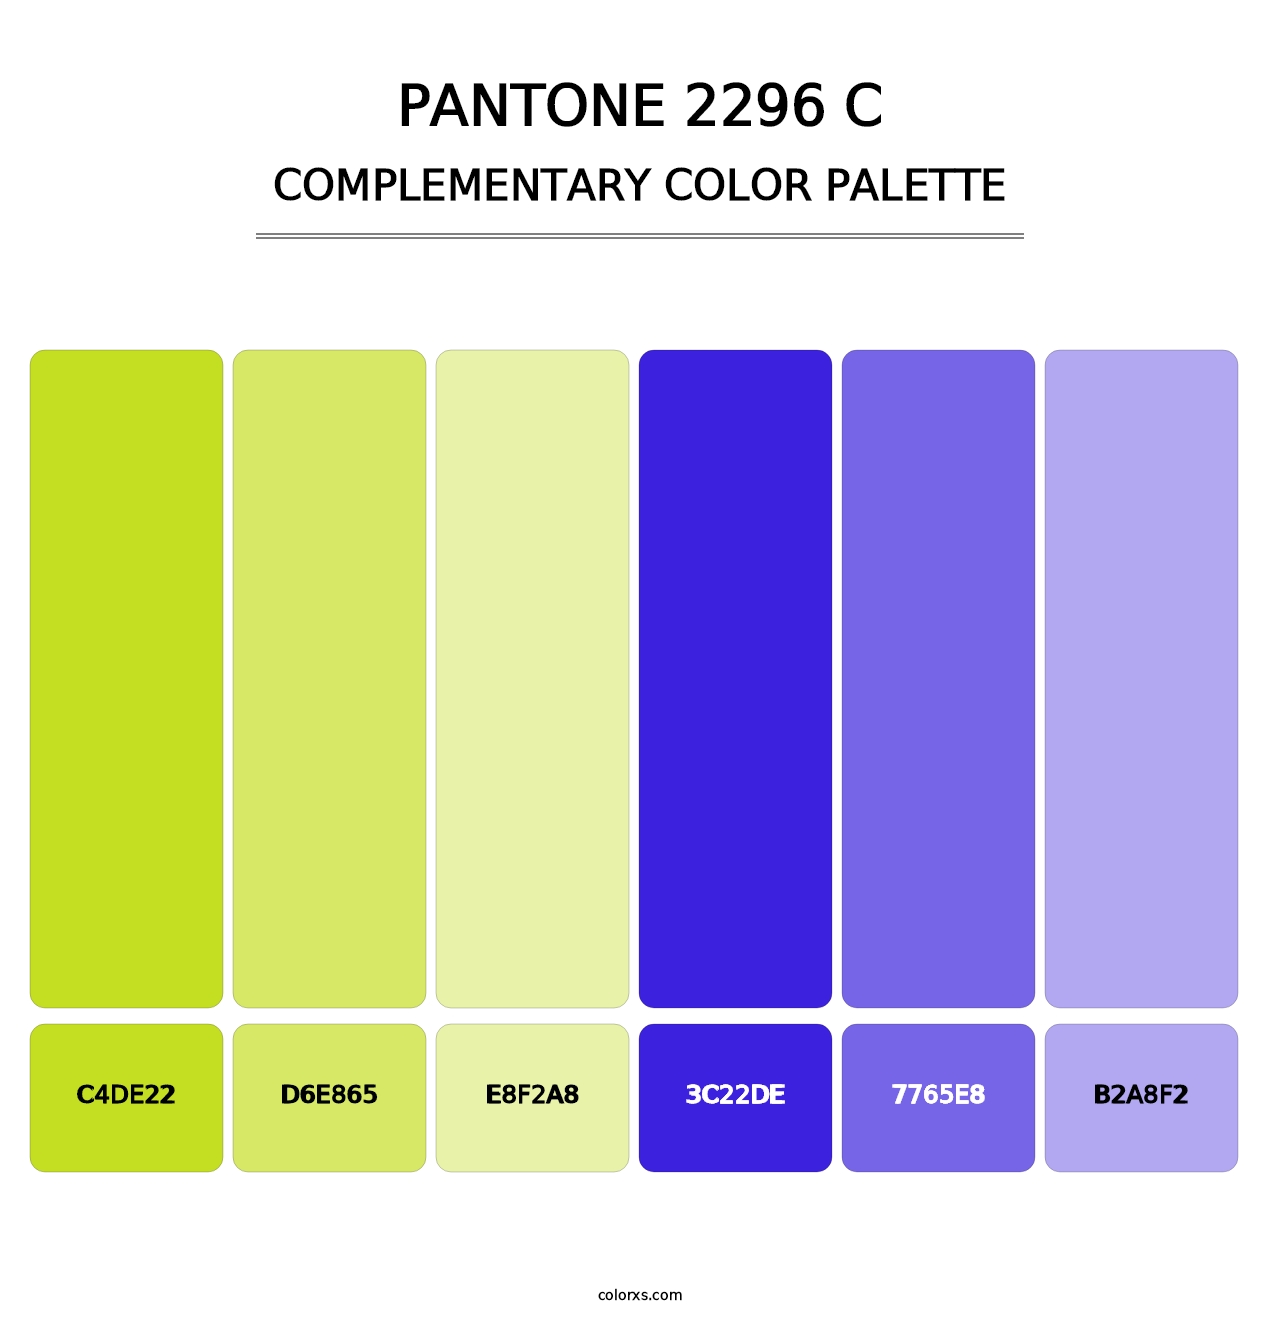 PANTONE 2296 C - Complementary Color Palette